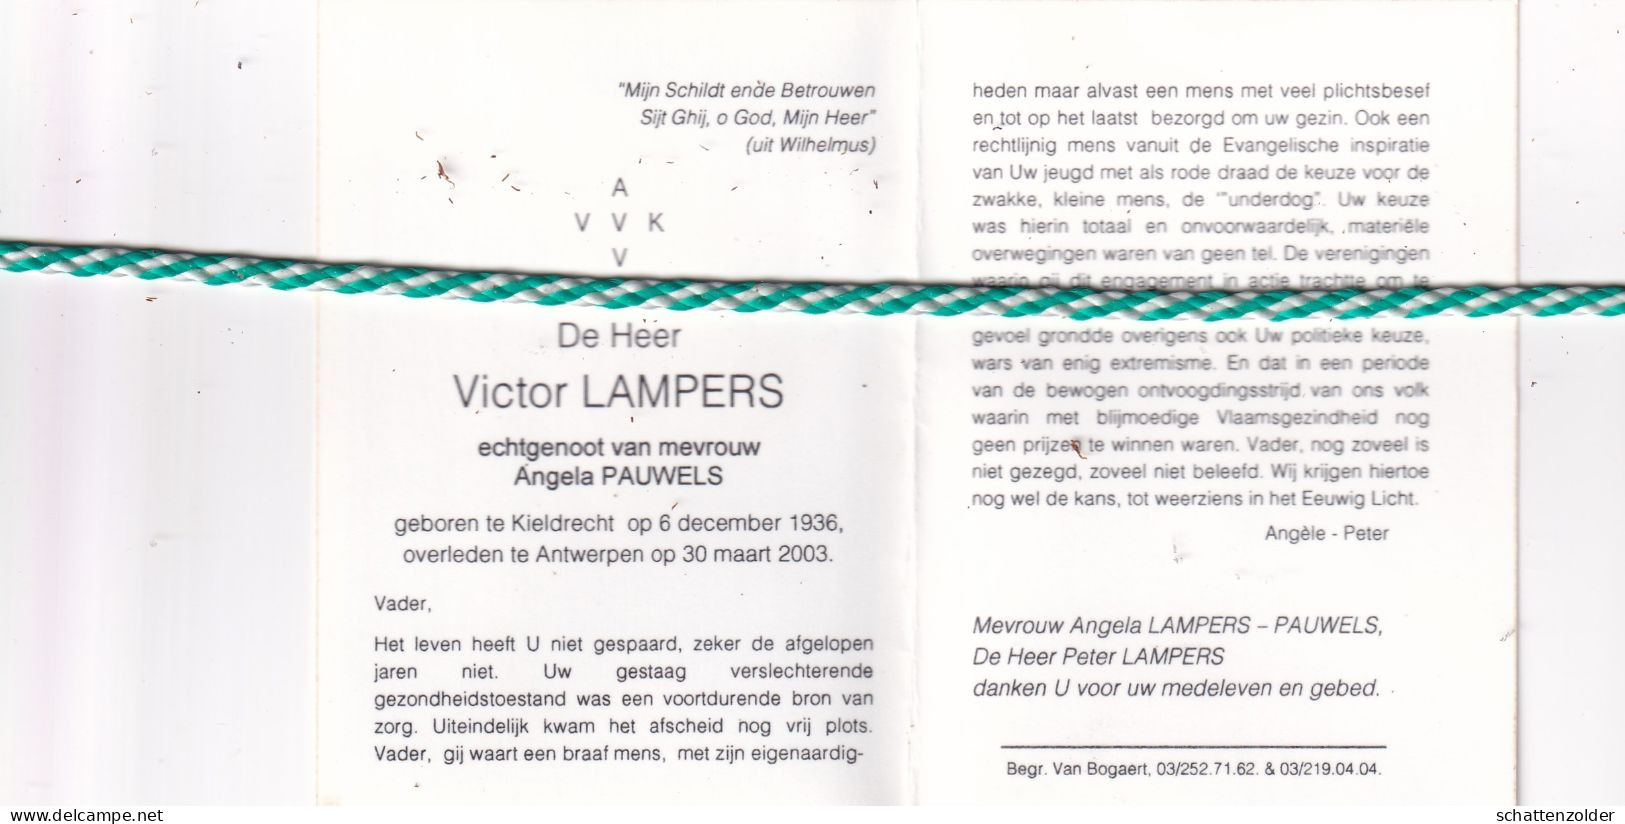 Victor Lampers-Pauwels, Kieldrecht 1936, Antwerpen 2003. AVV VVK. Foto - Obituary Notices